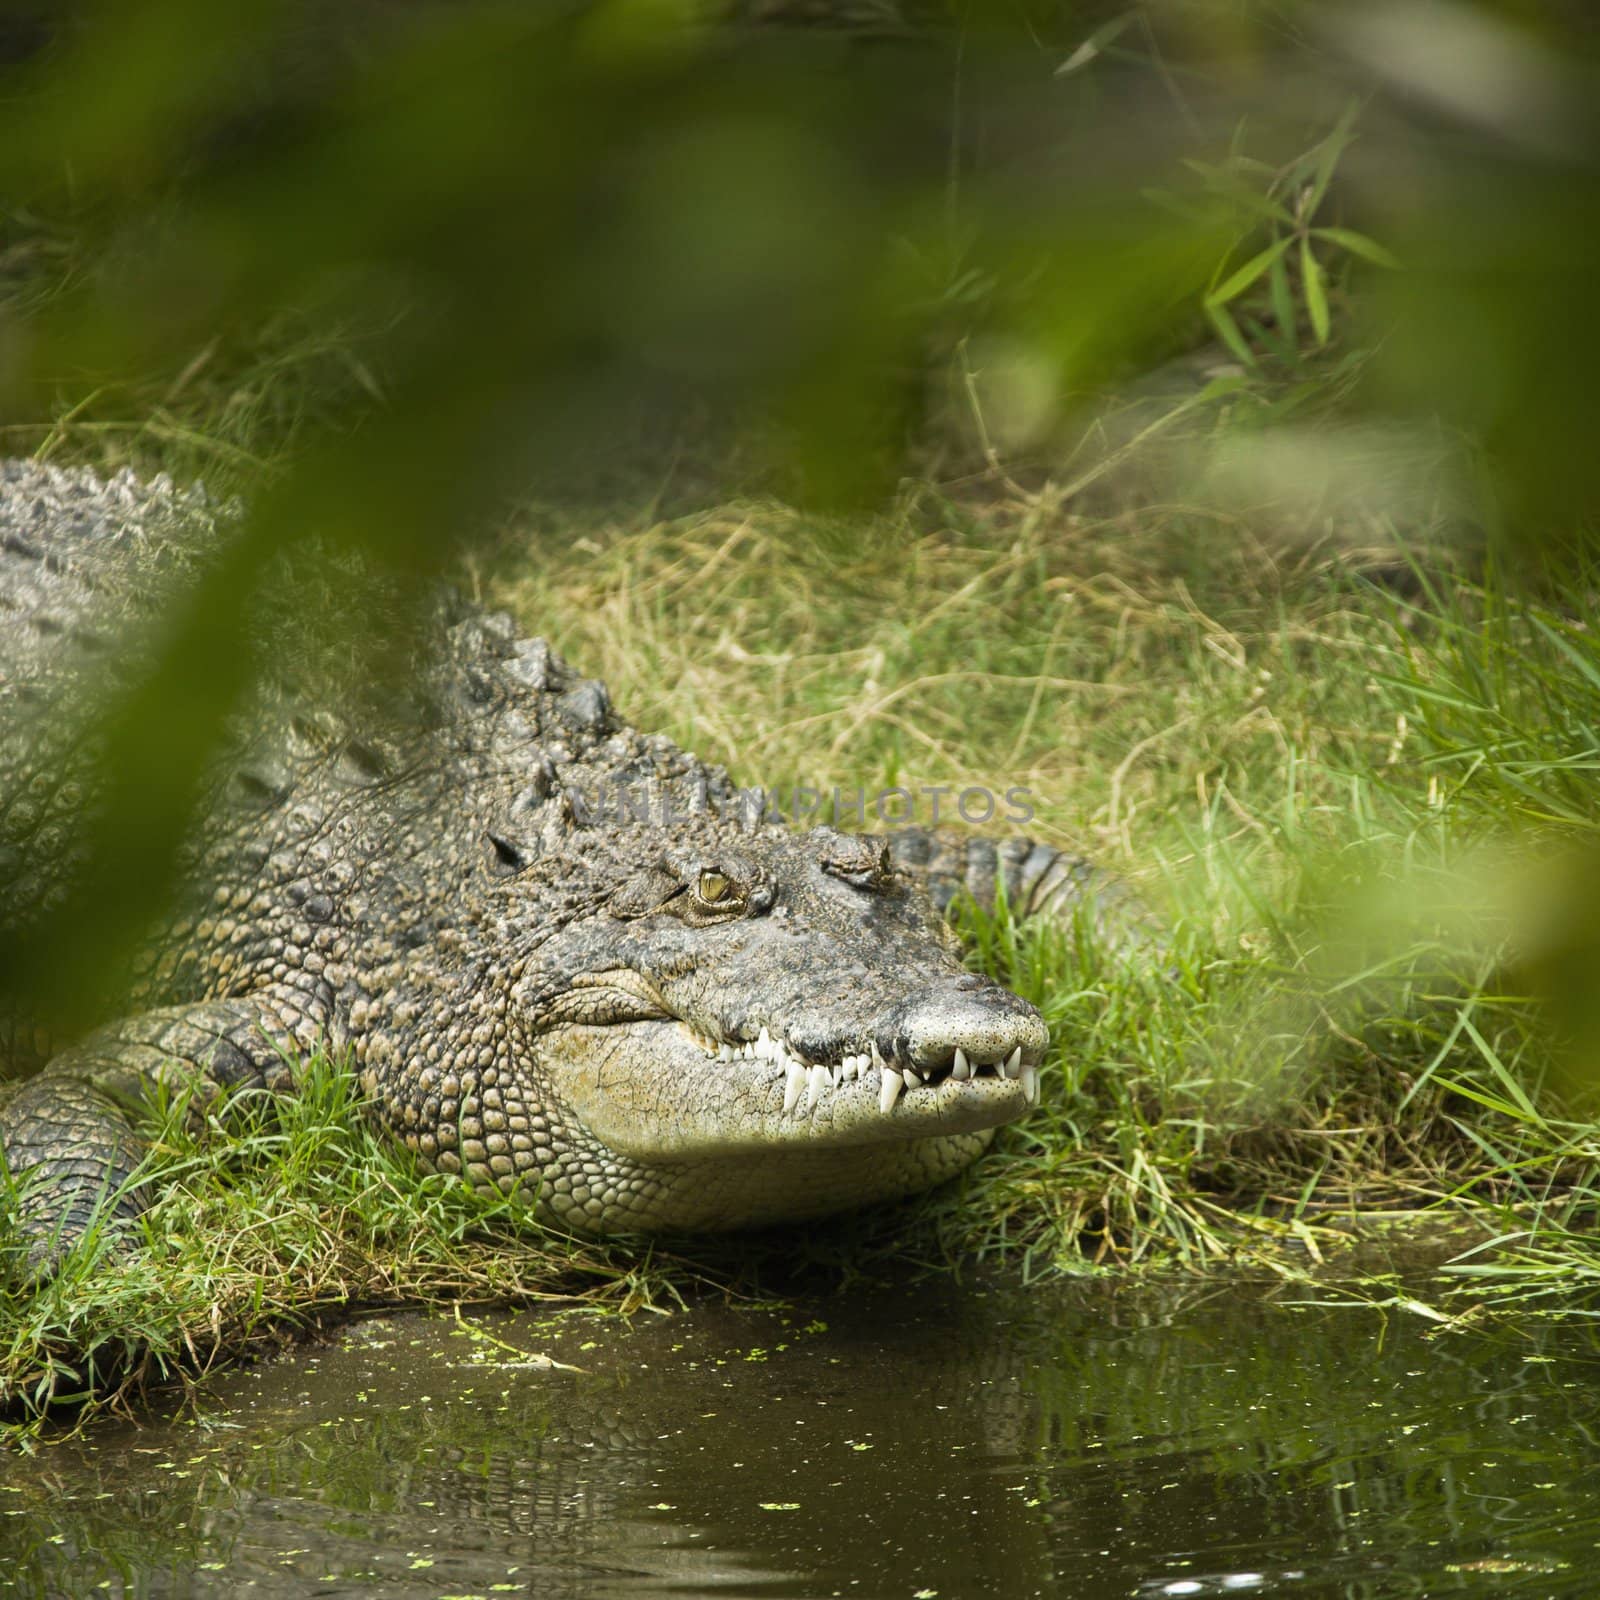 Crocodile by water edge in Australia.